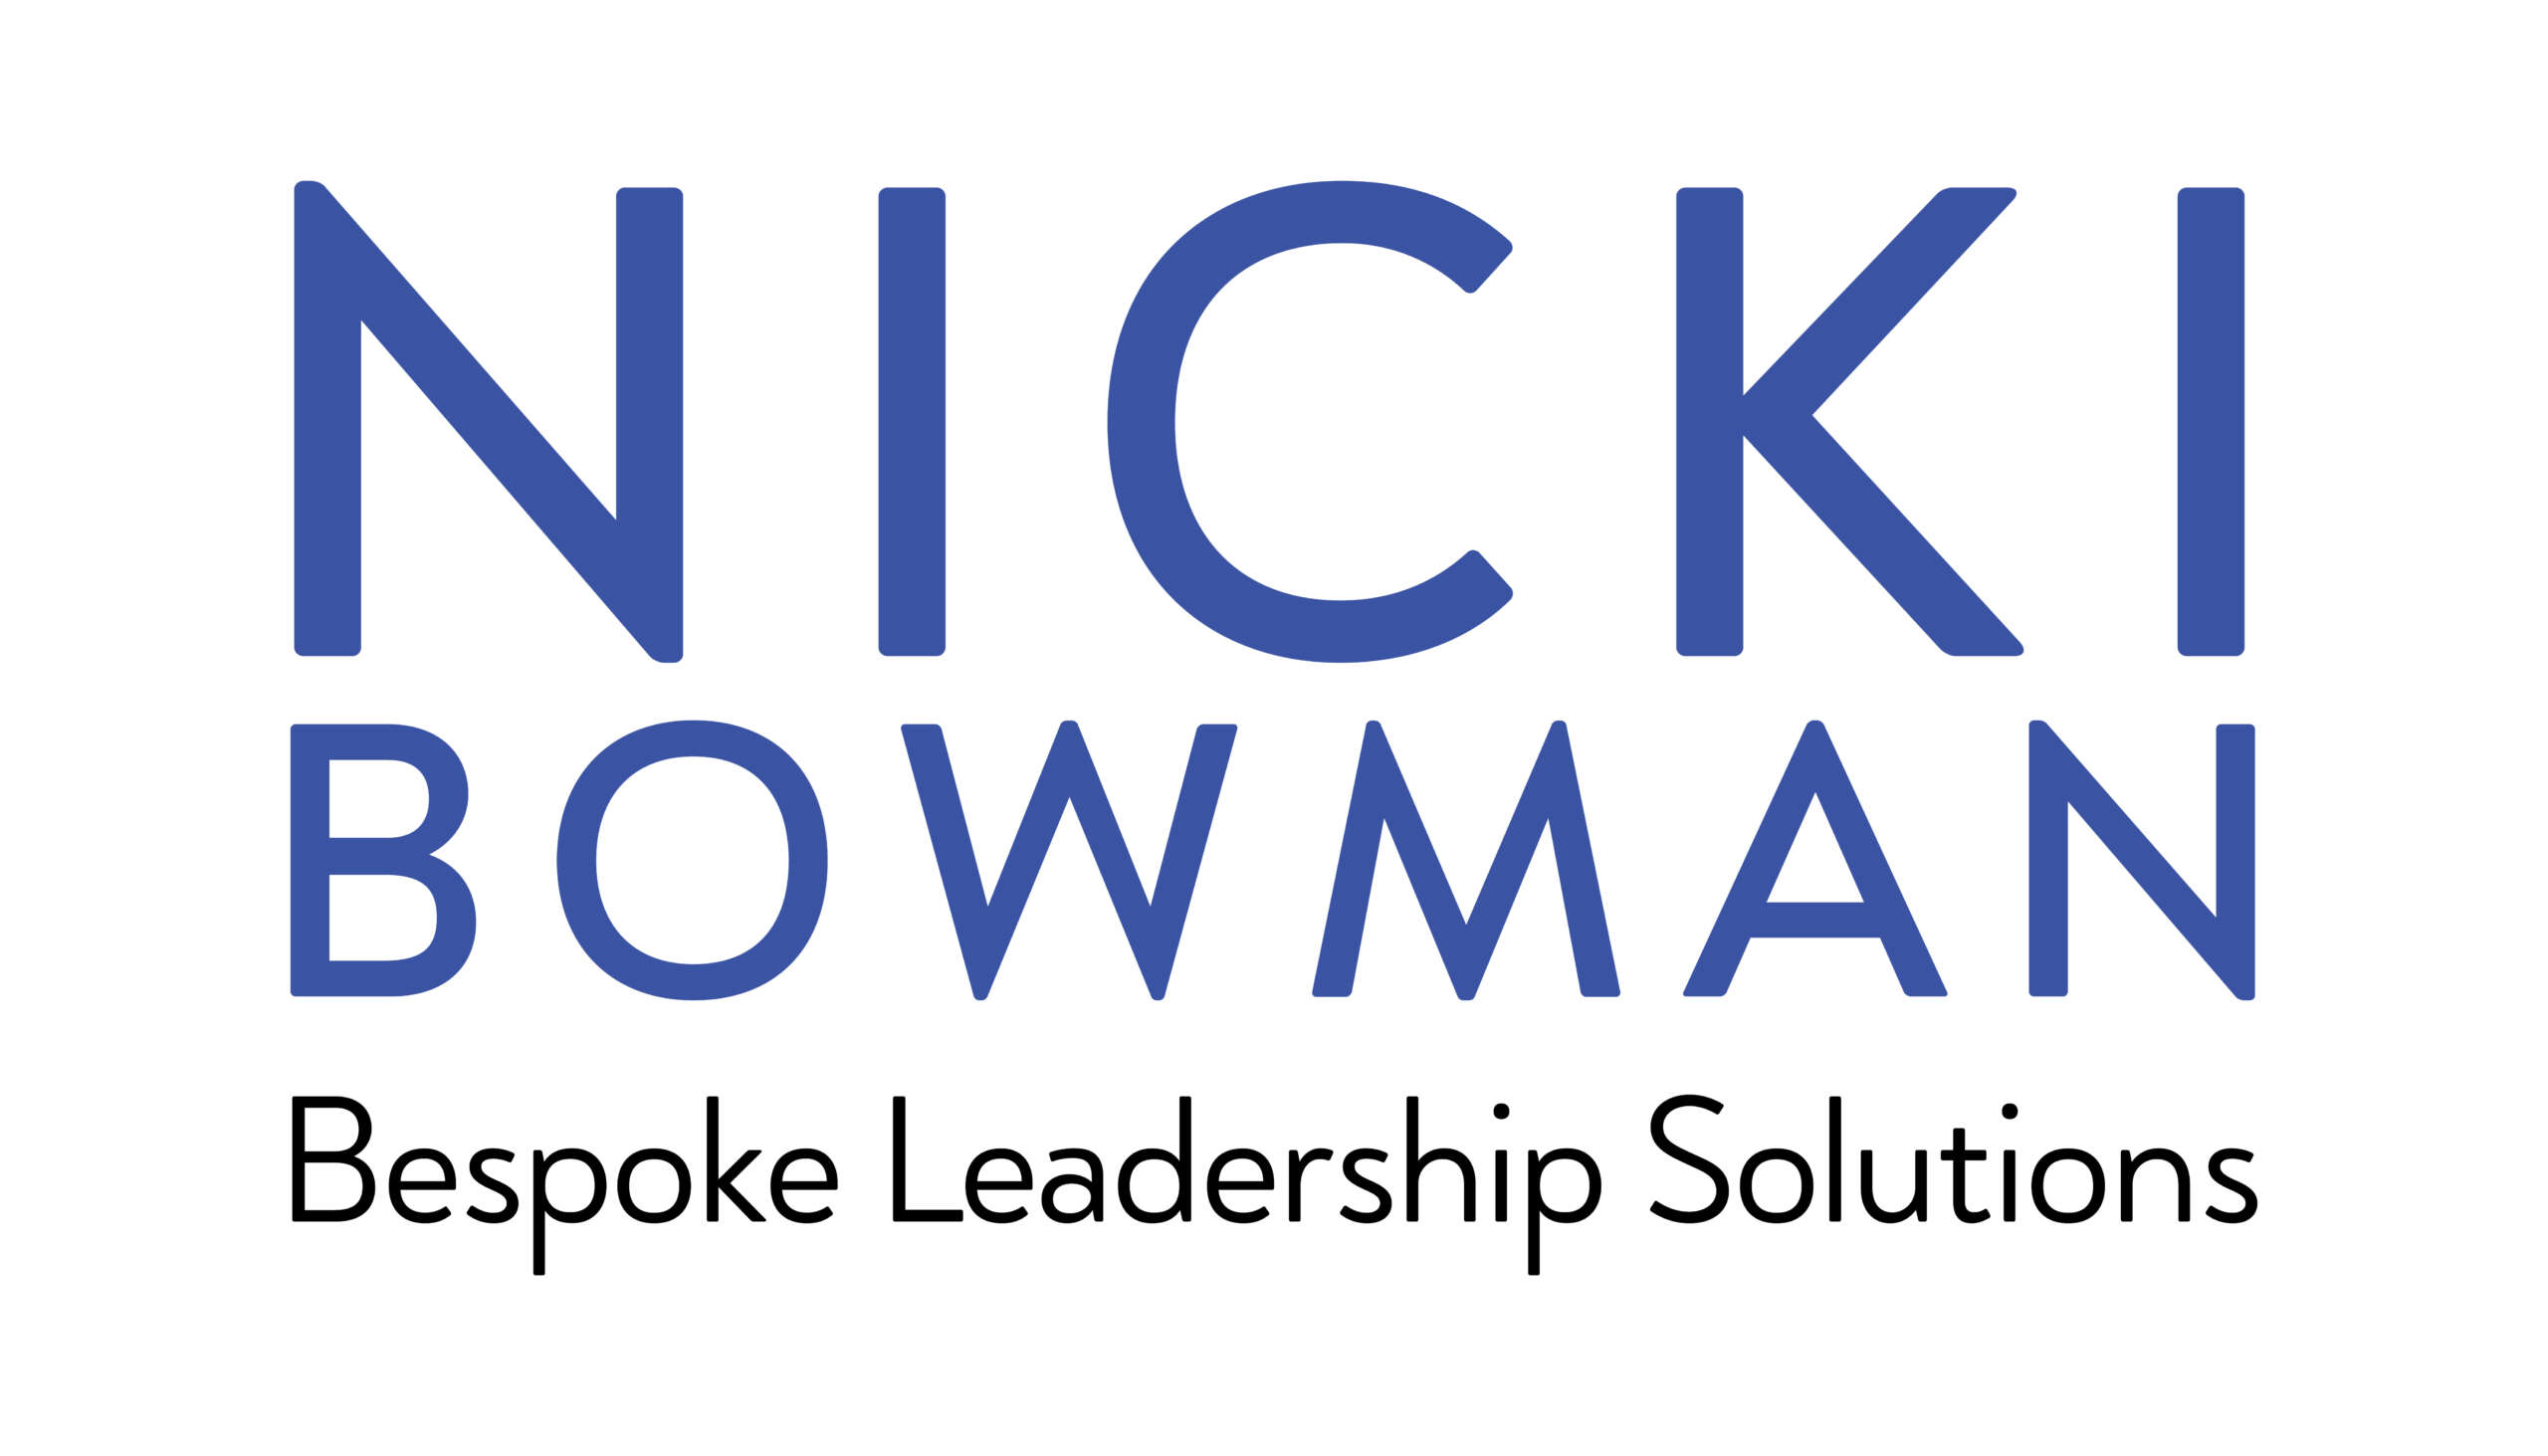 Nicki Bowman Bespoke Leadership